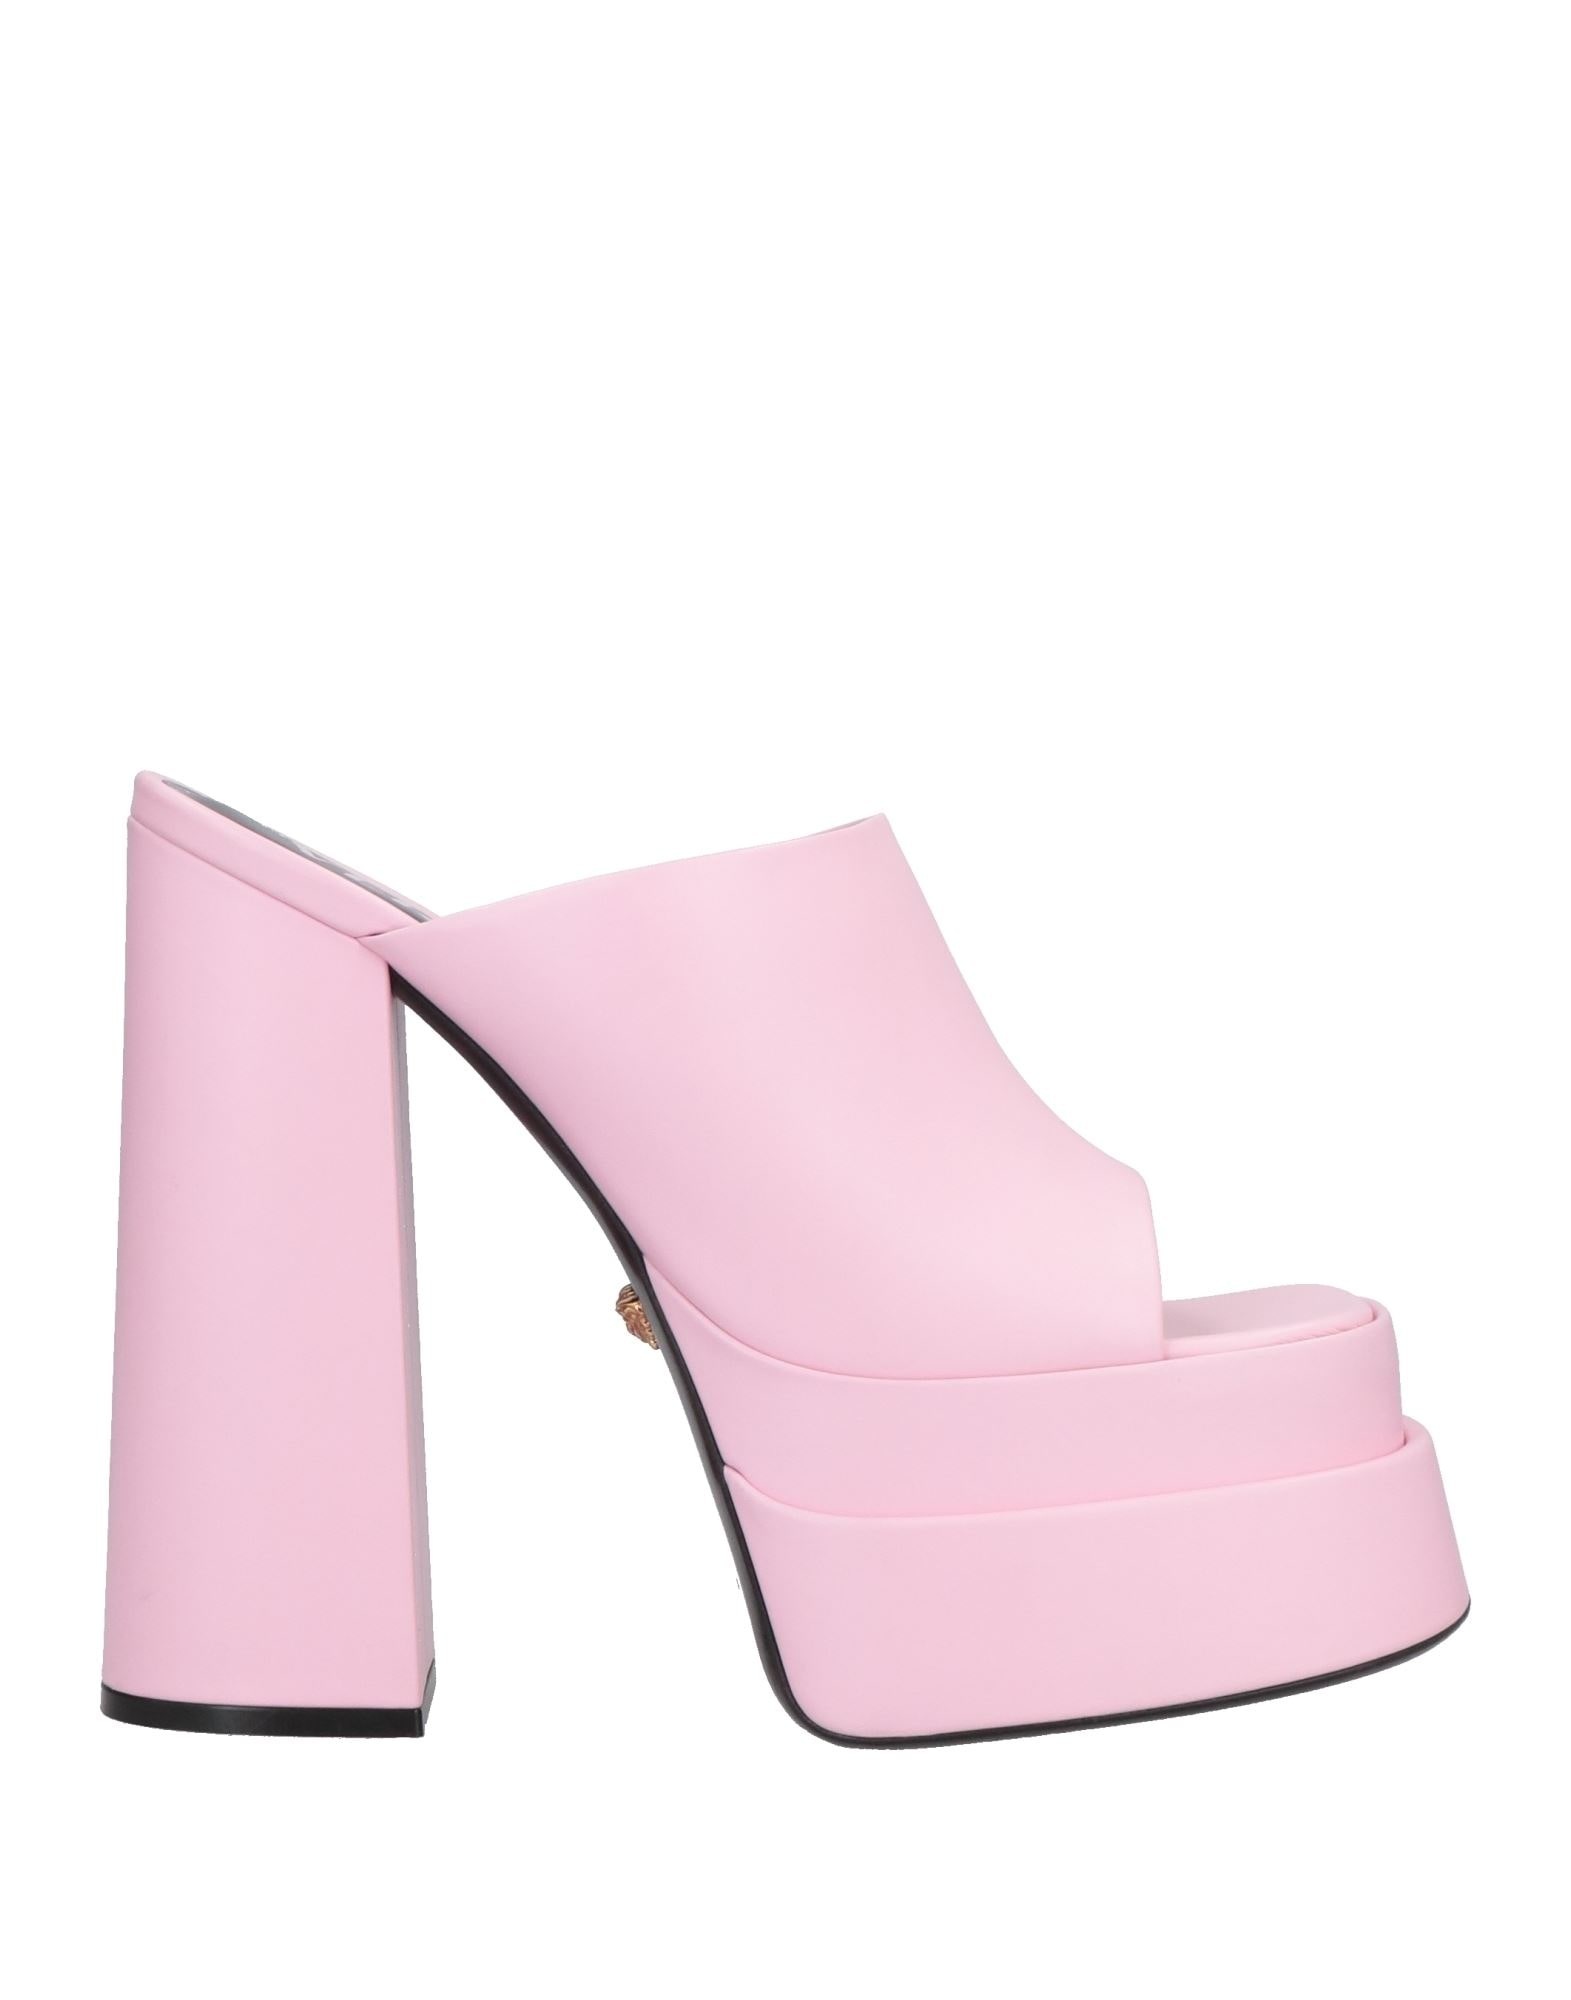 Pink Women's Sandals - 1